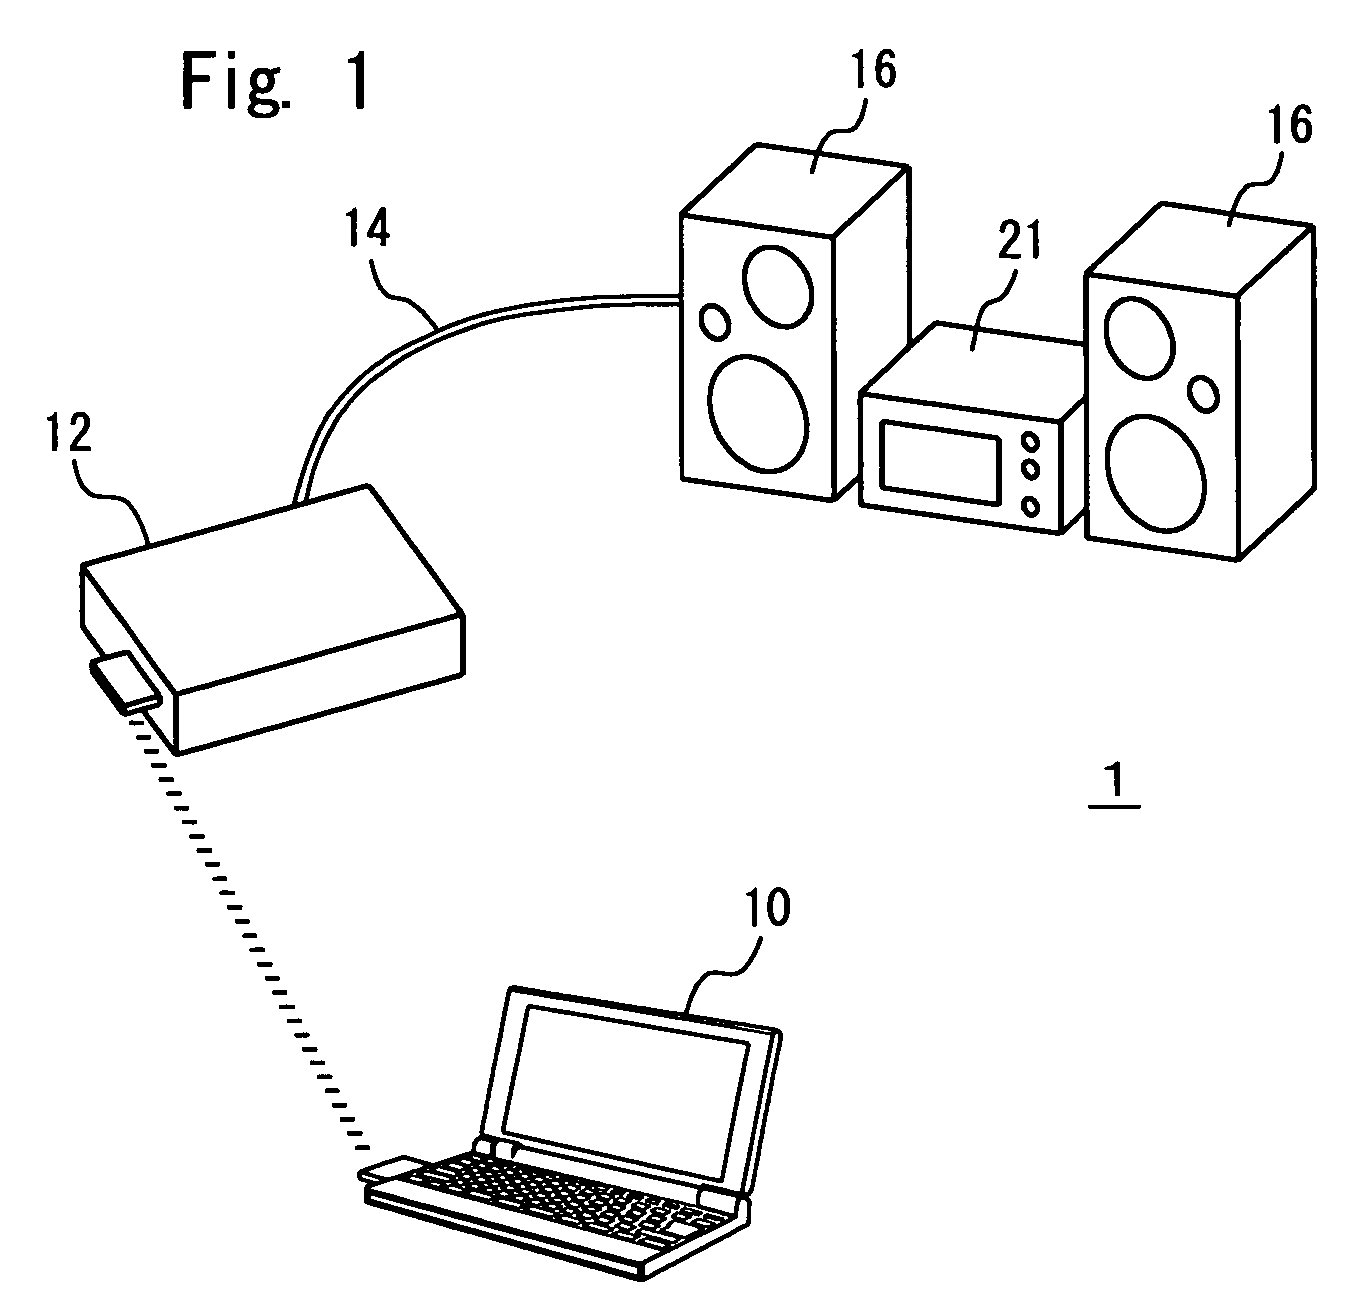 Network AV system using personal computer